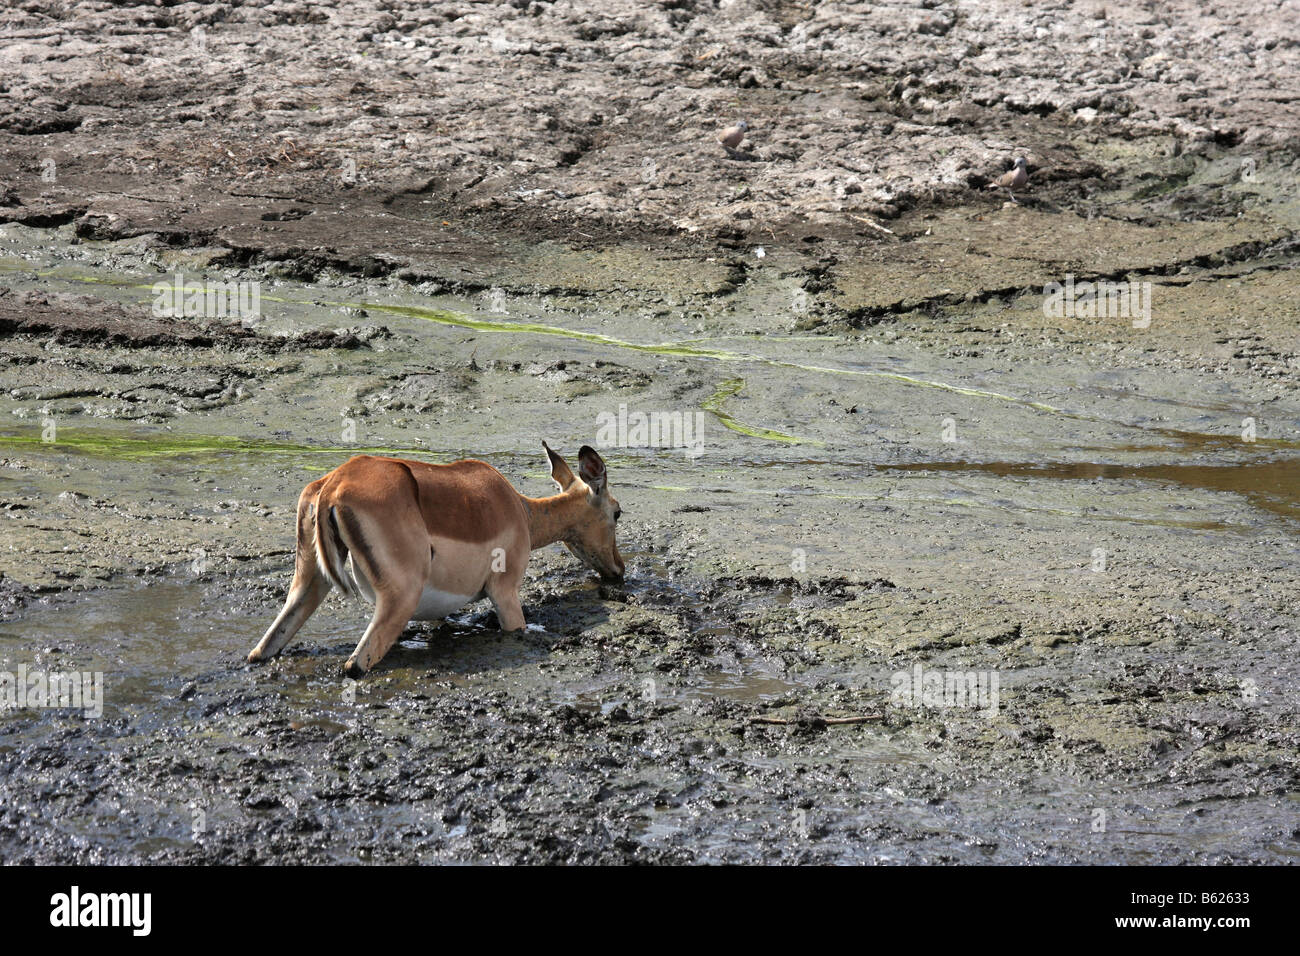 impala drinking from a muddy water hole Stock Photo